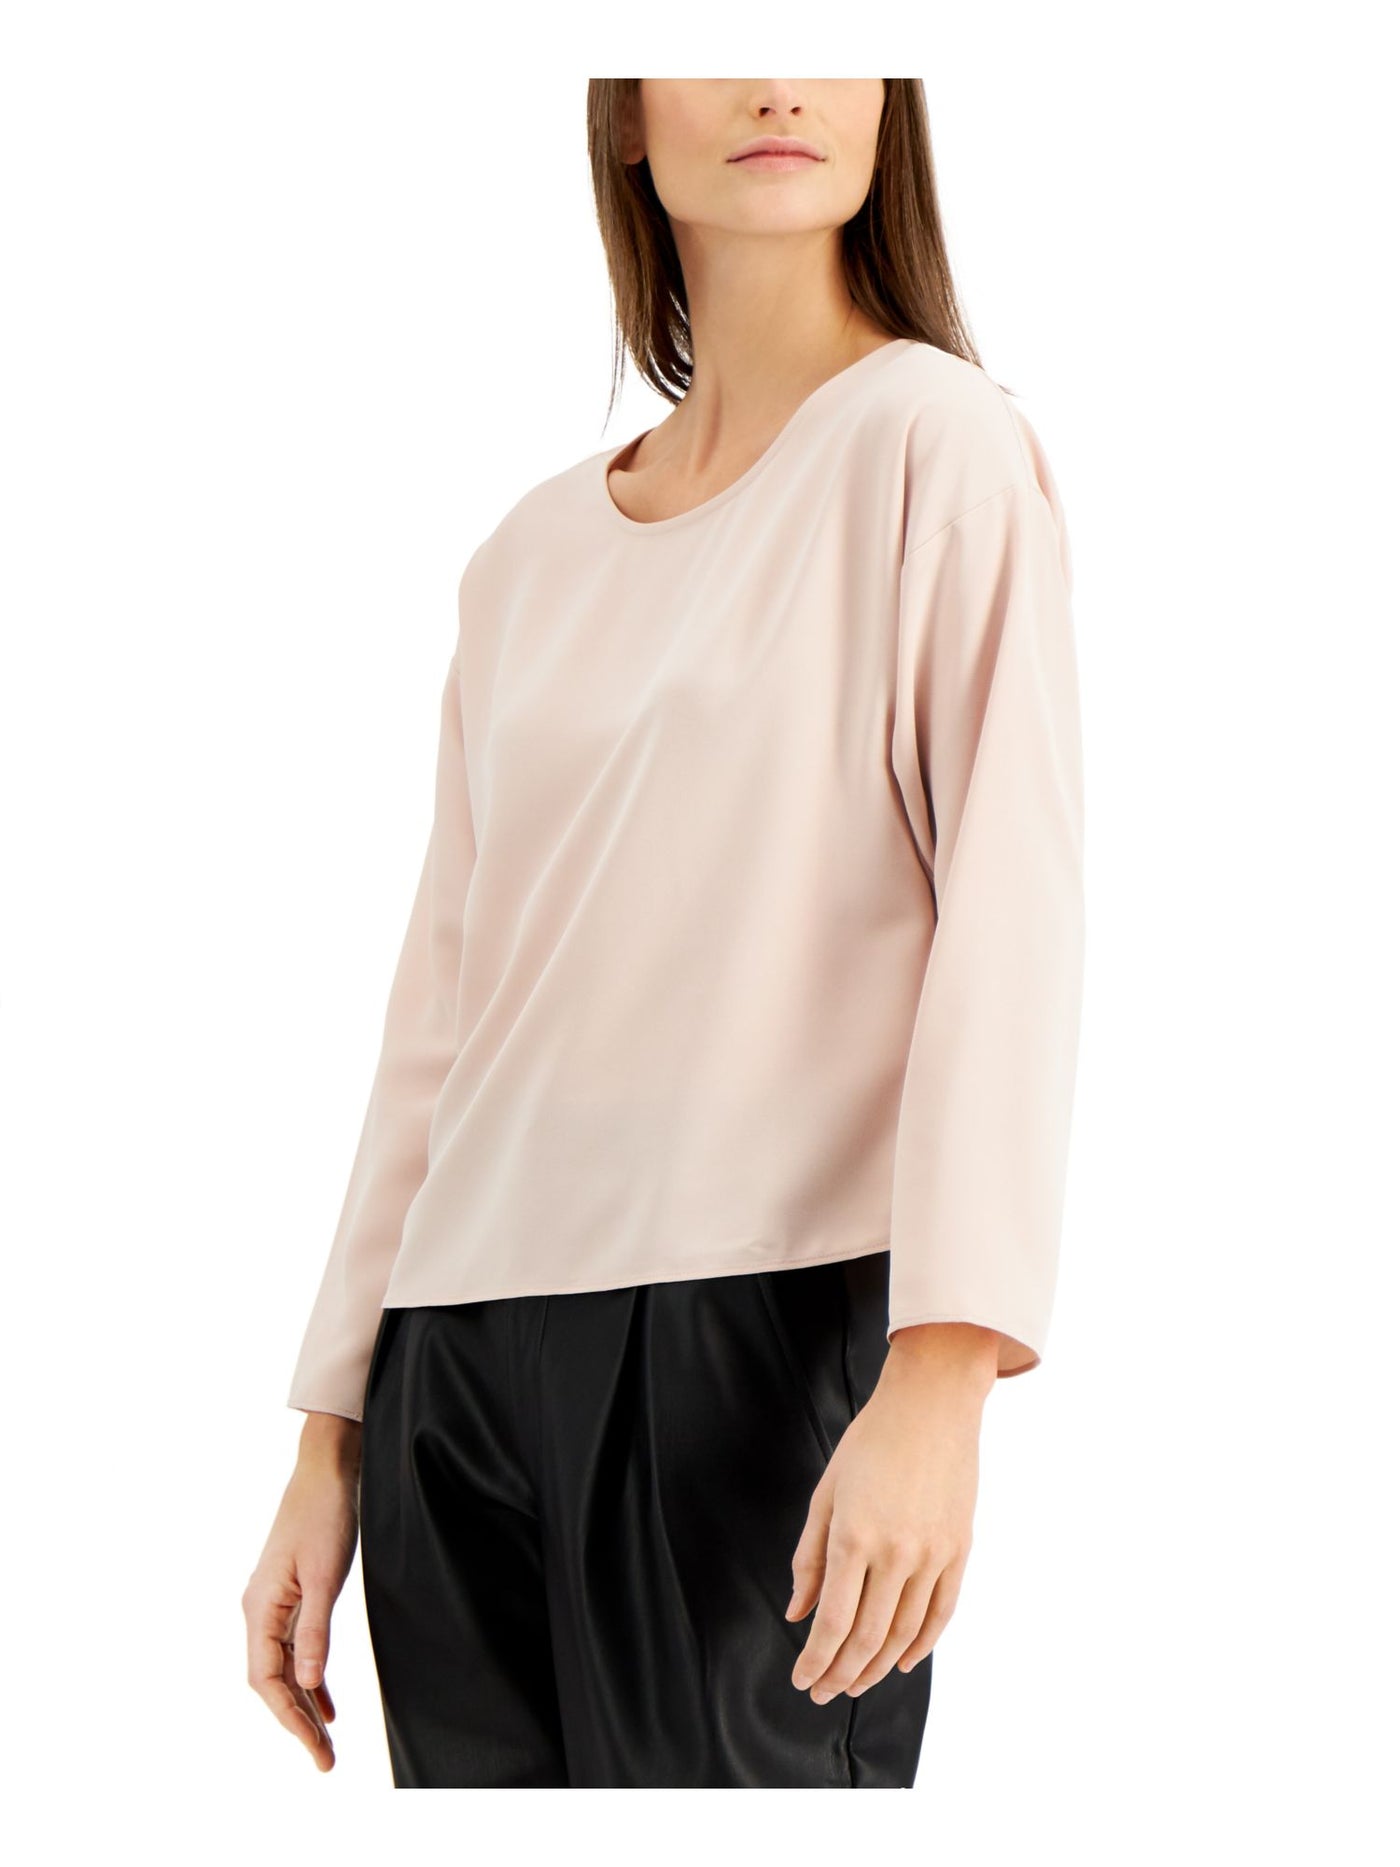 ALFANI Womens Pink Long Sleeve Scoop Neck Top XL